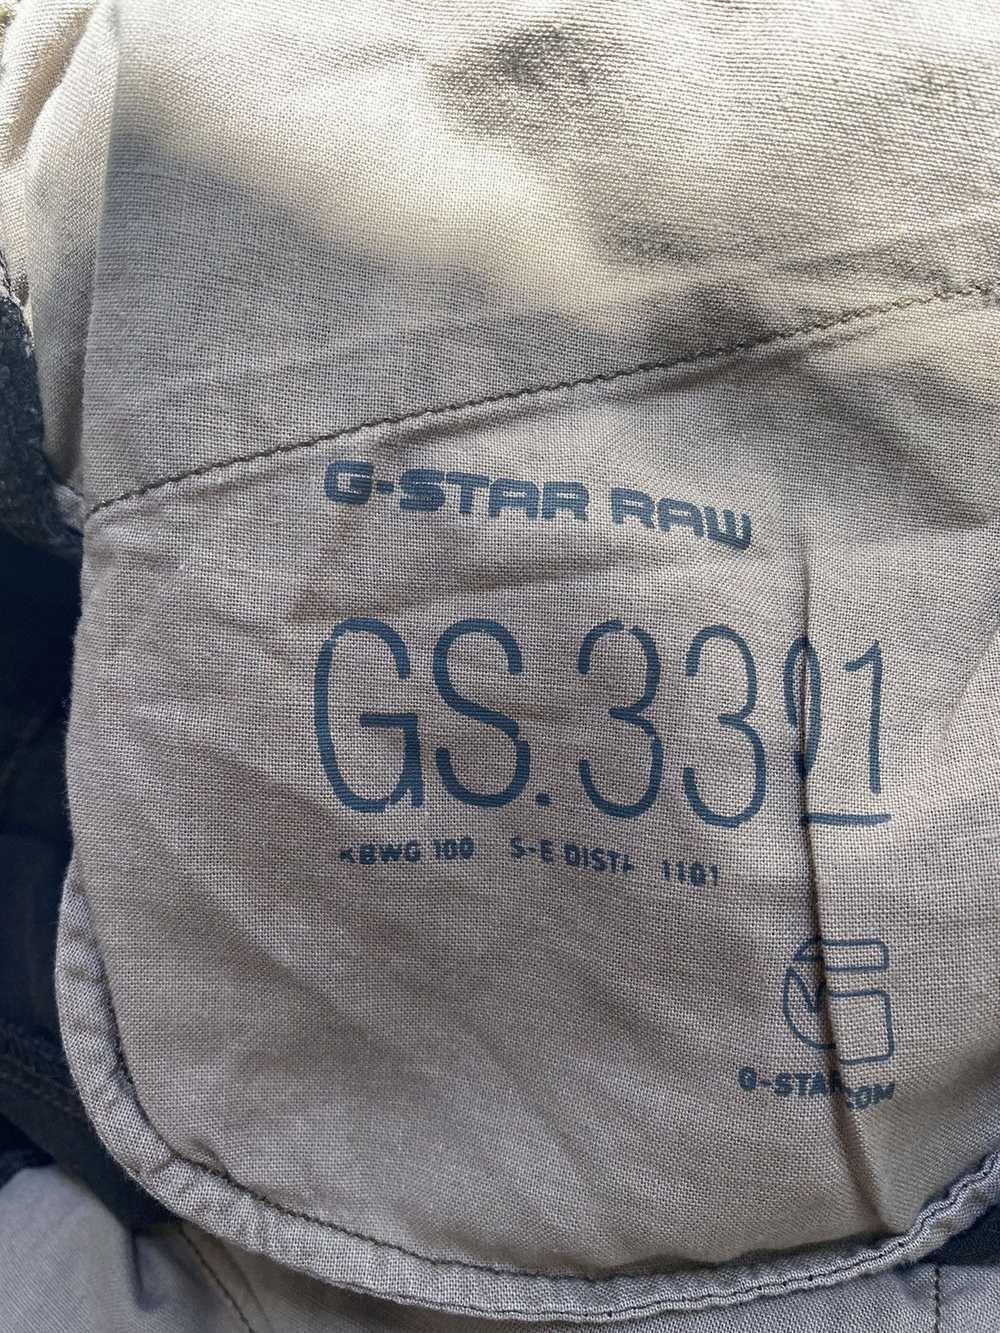 G Star Raw G star raw cargo shorts - image 6